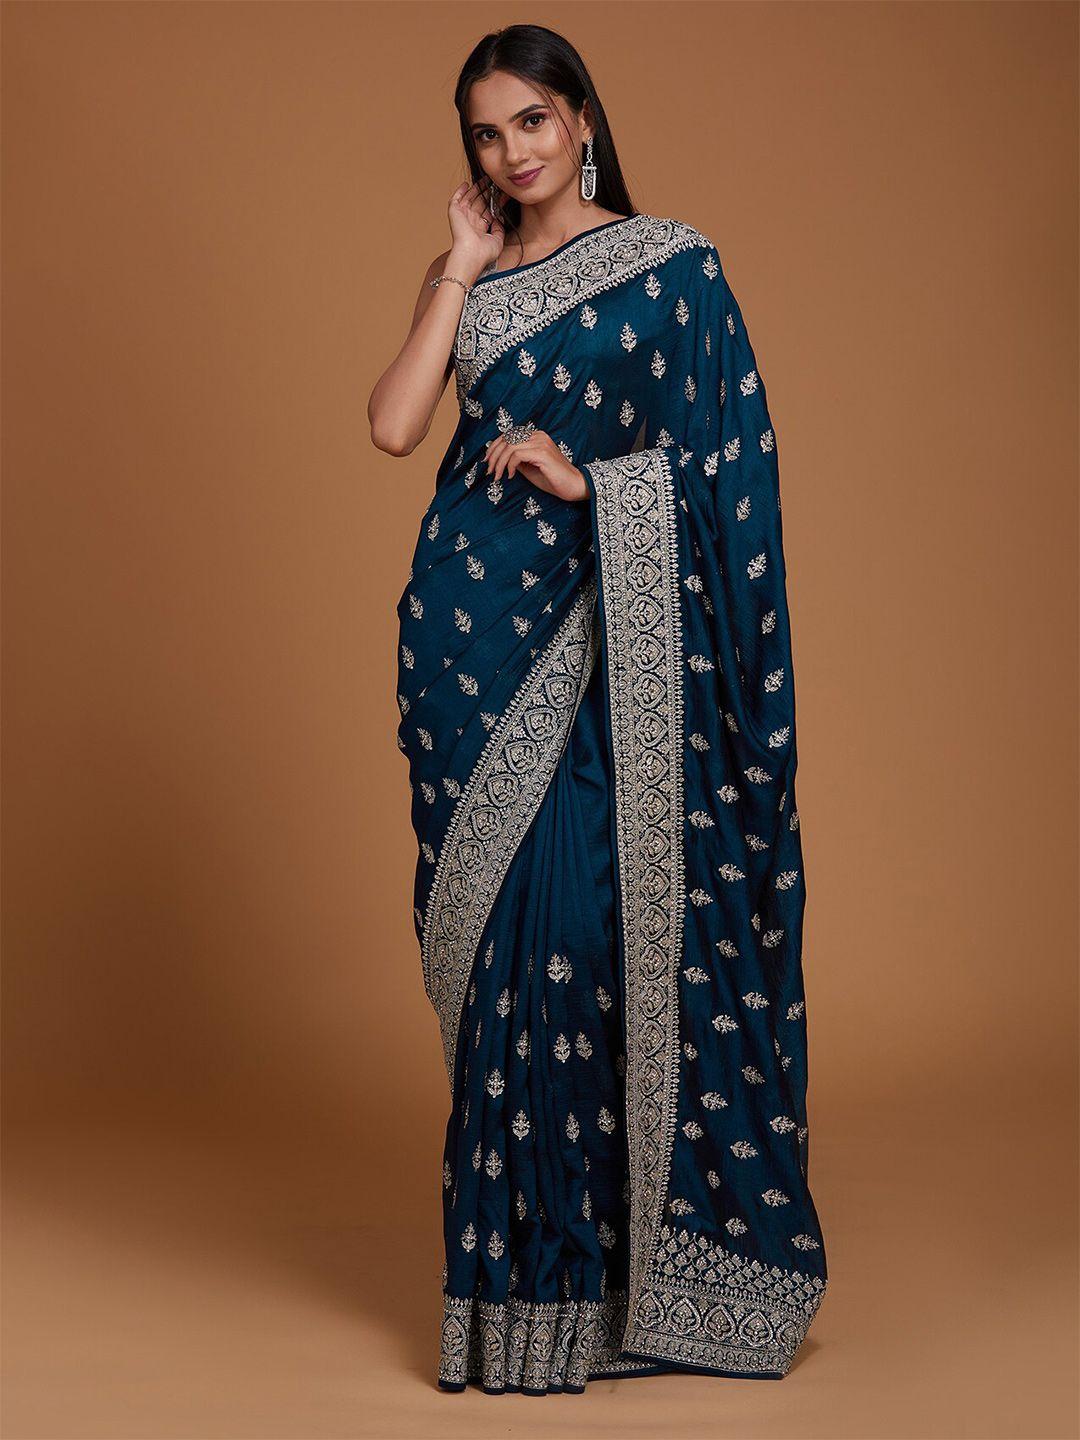 koskii-blue-&-silver-toned-floral-embroidered-art-silk-saree